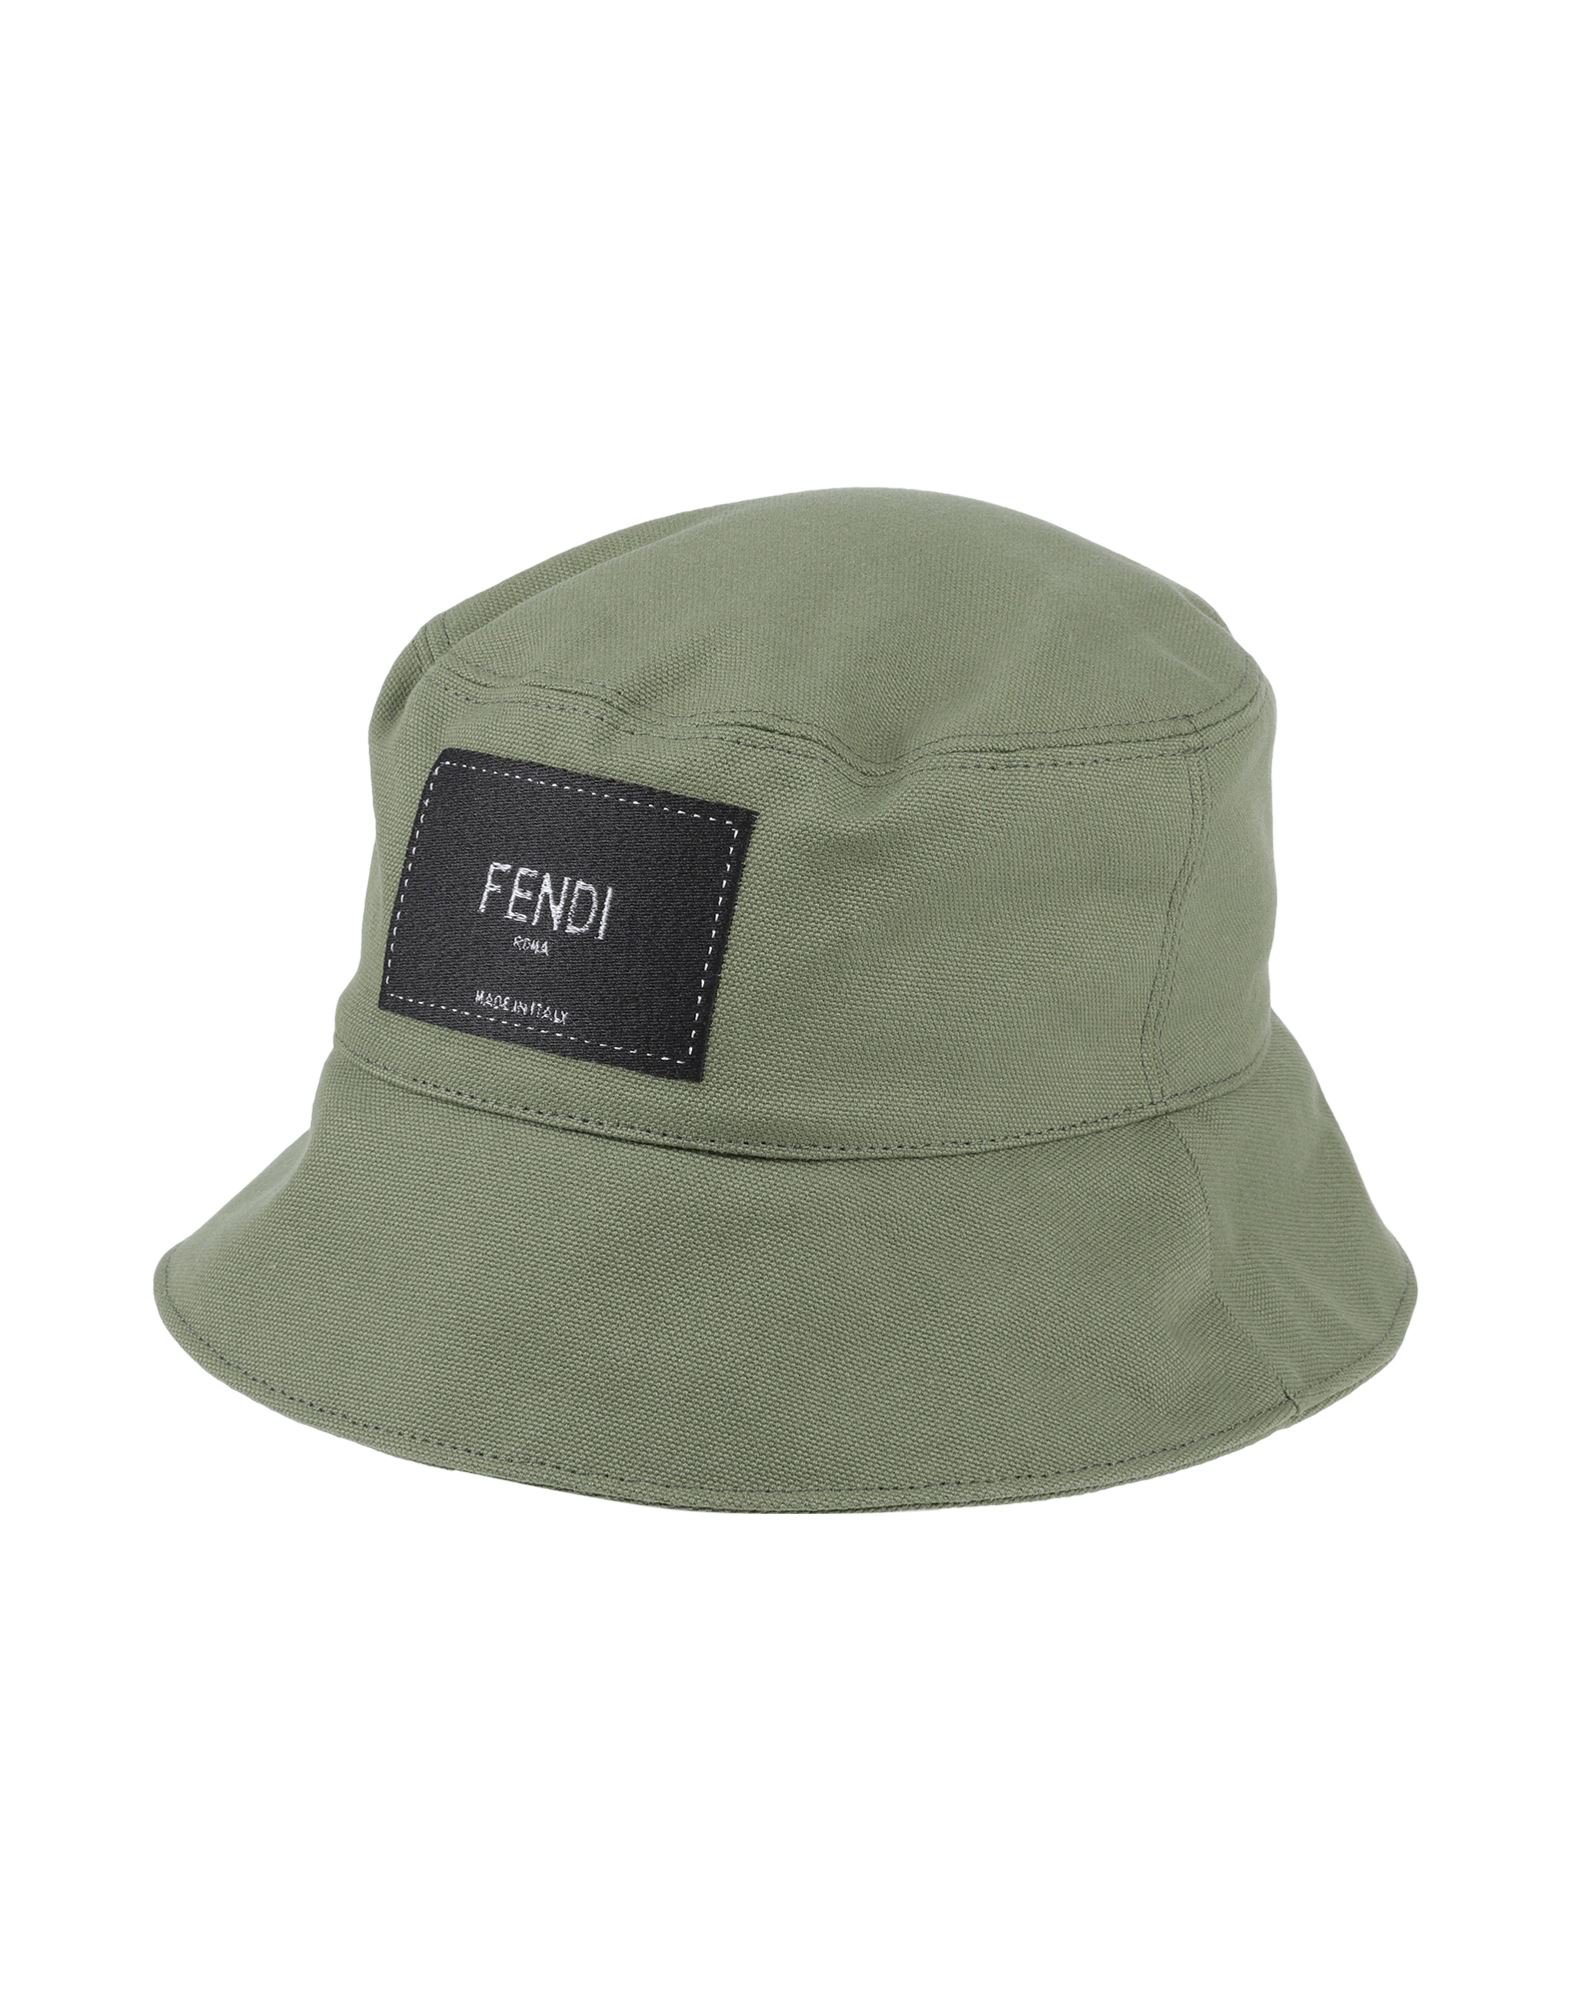 Fendi Man Hat Military Green Size 7 ⅛ Cotton